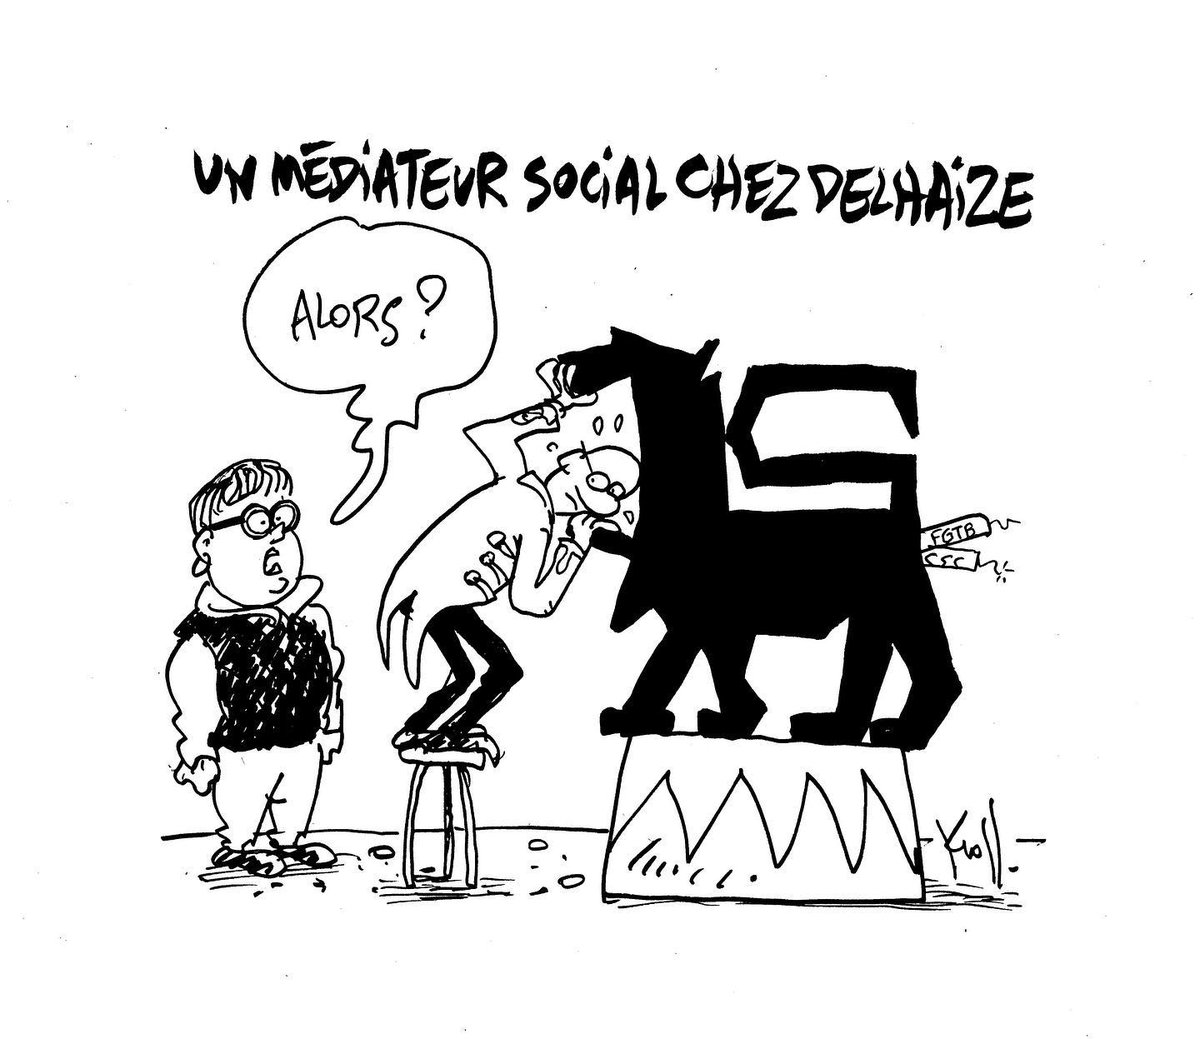 #delhaize #mediateur #greve #syndicat lesoirbe